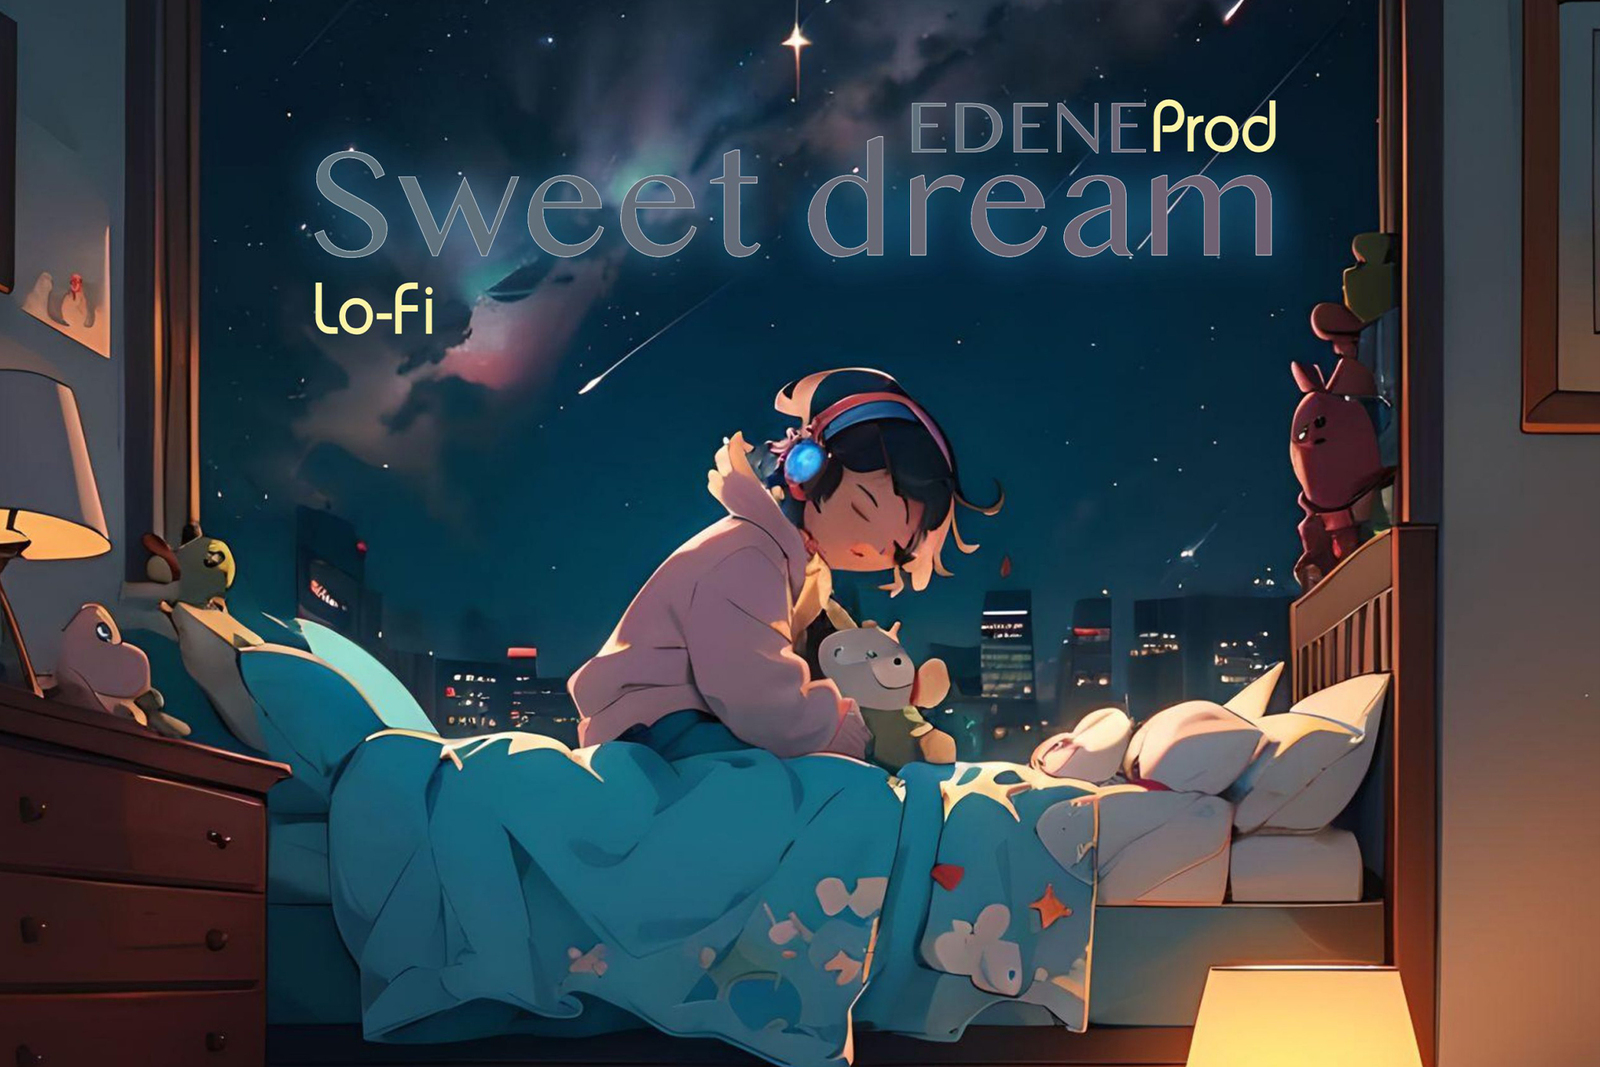 Sortie du dernier album Lo-fi d'EDENE PROD : "Sweet Dream" par Alexandra Edin